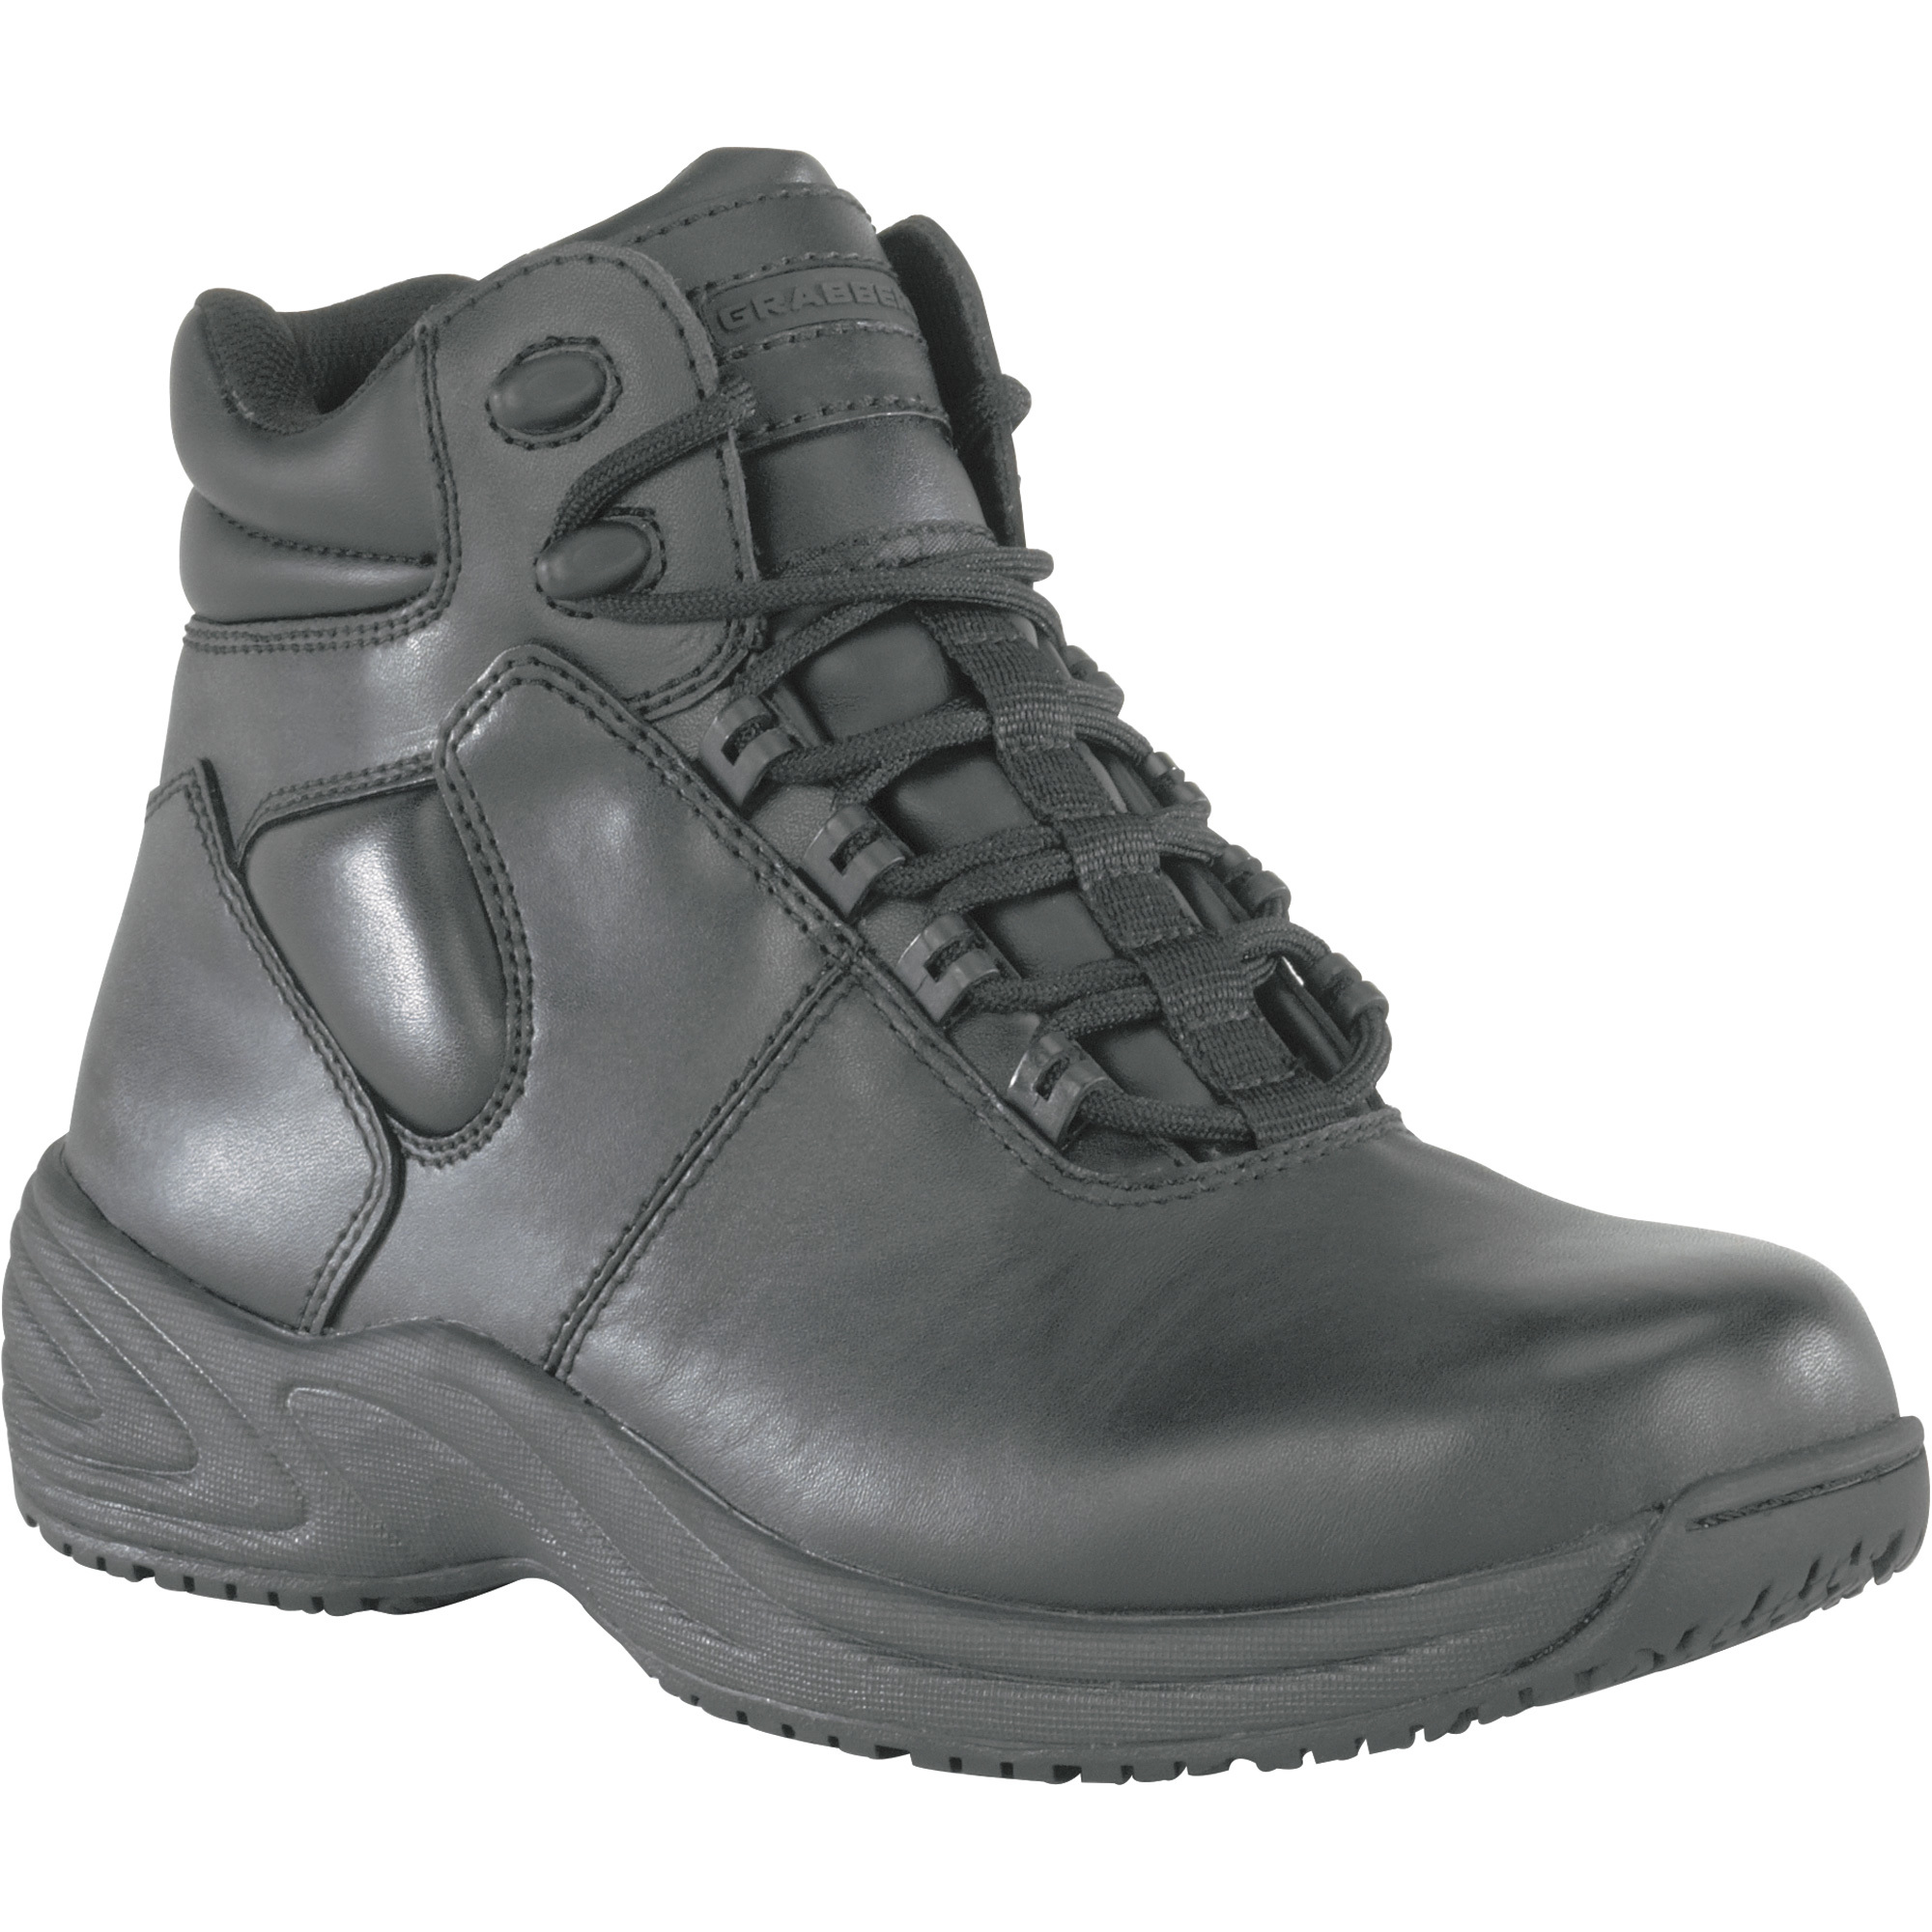 Grabbers Men's 6Inch Fastener Work Boots - Black, Size 10, Model G1240